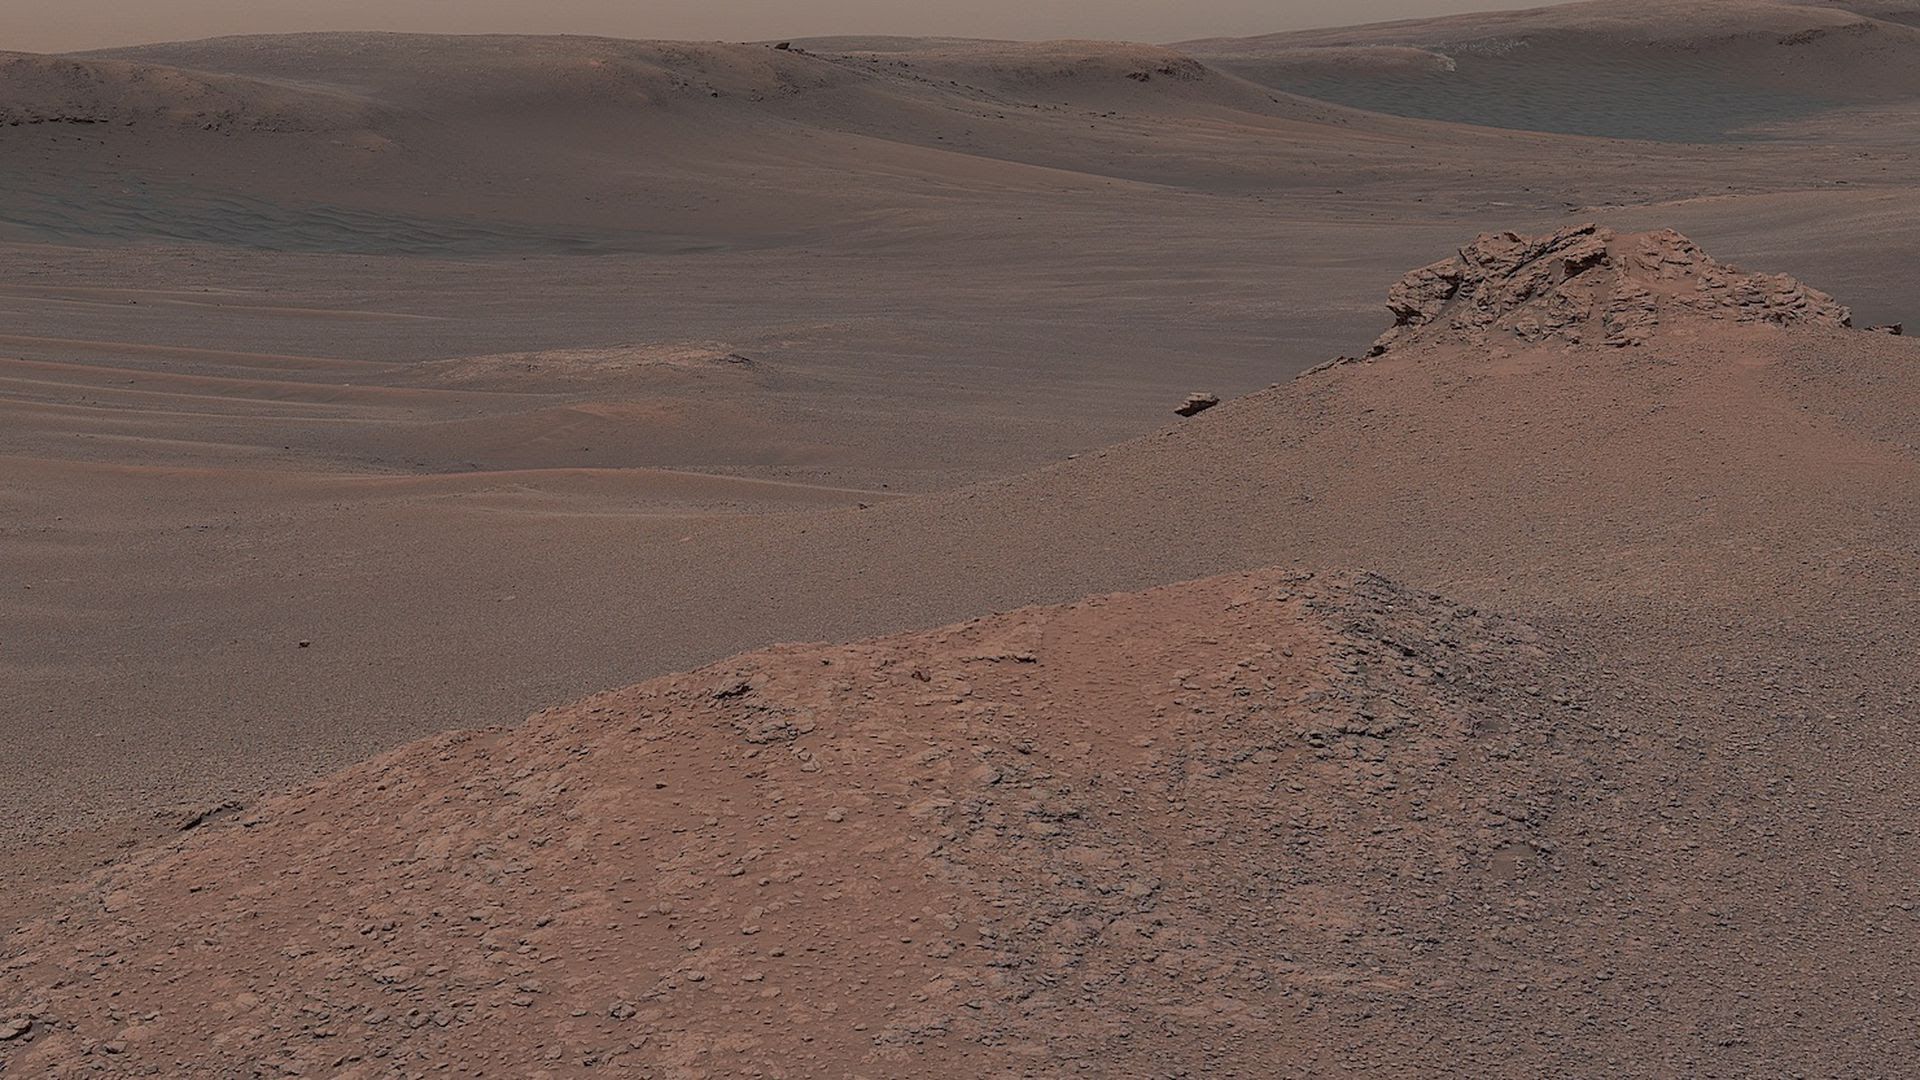 Mars as seen by the Curiosity rover